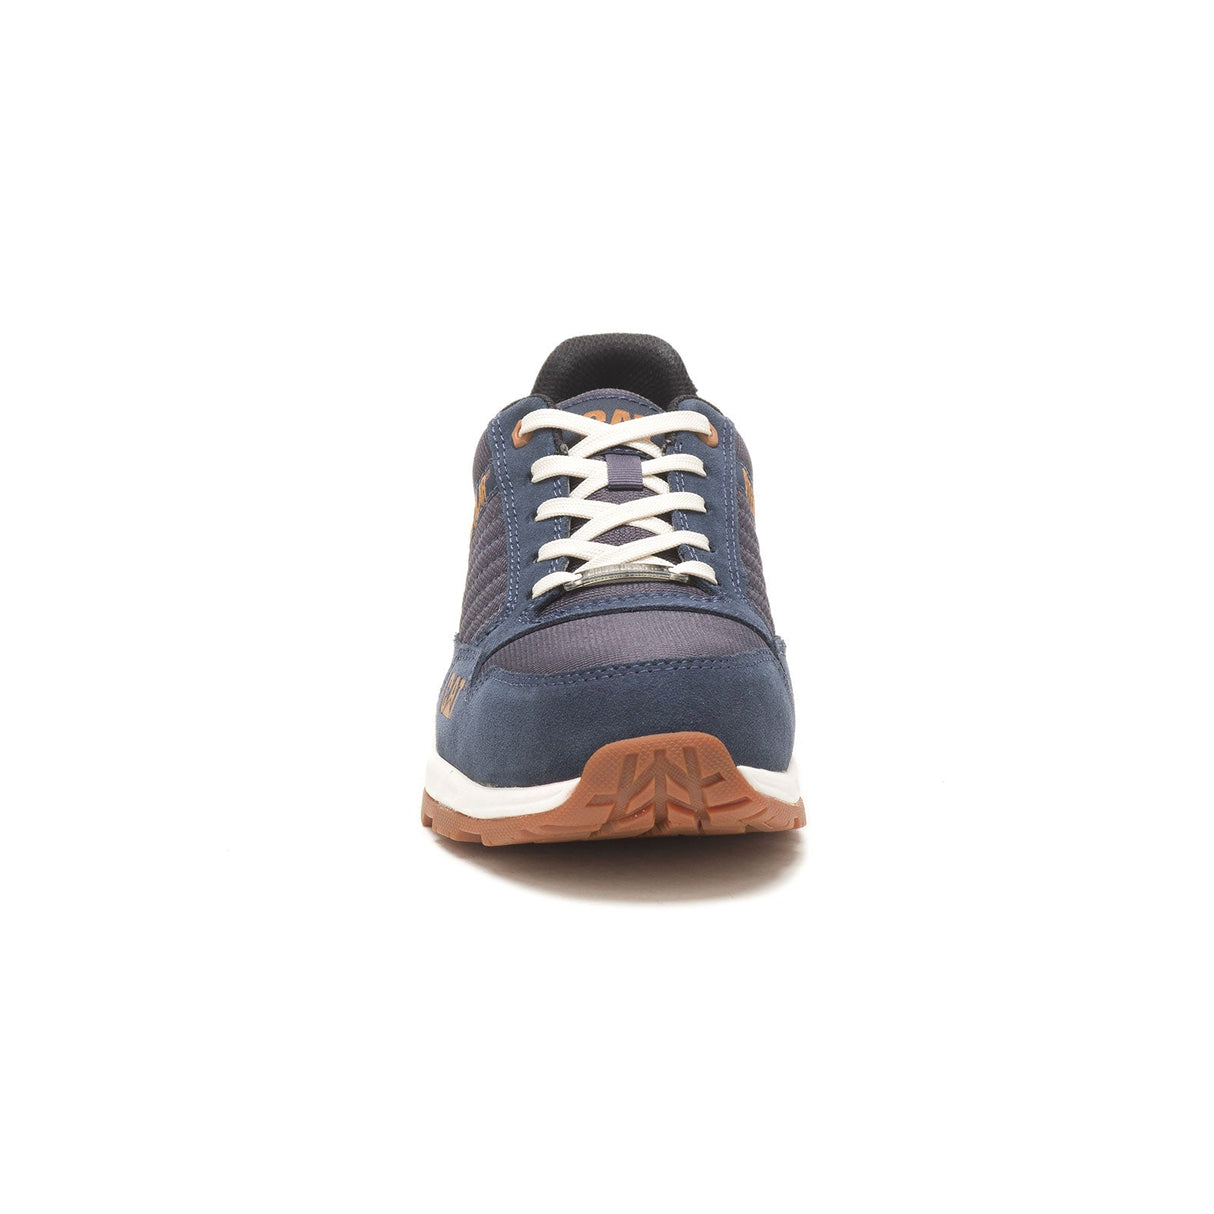 Caterpillar Venward Men's Composite-Toe Work Shoes P91482-3